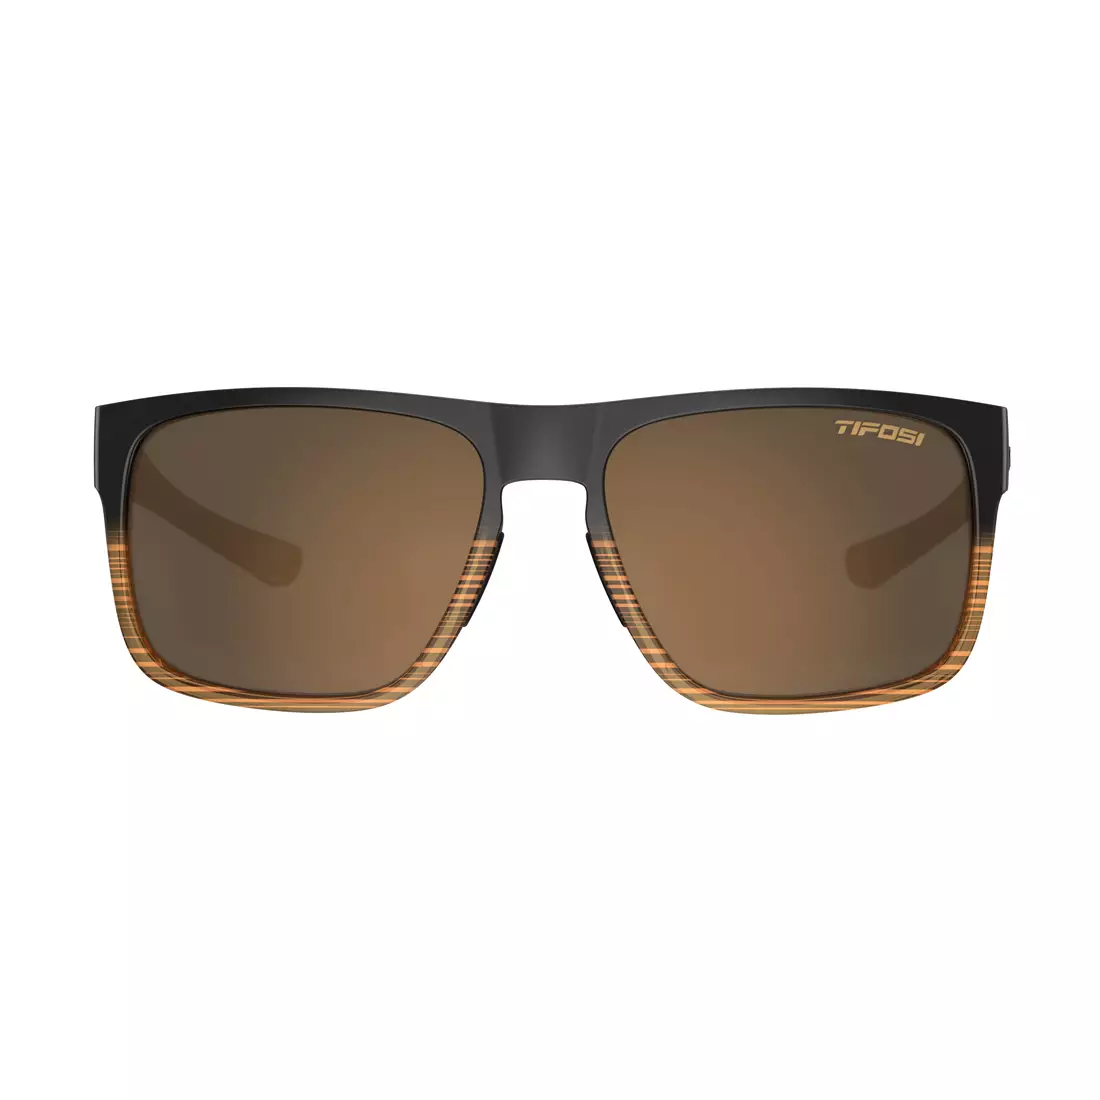 TIFOSI ochelari sportivi swick brown fade (Brown 17,1%) TFI-1520409471